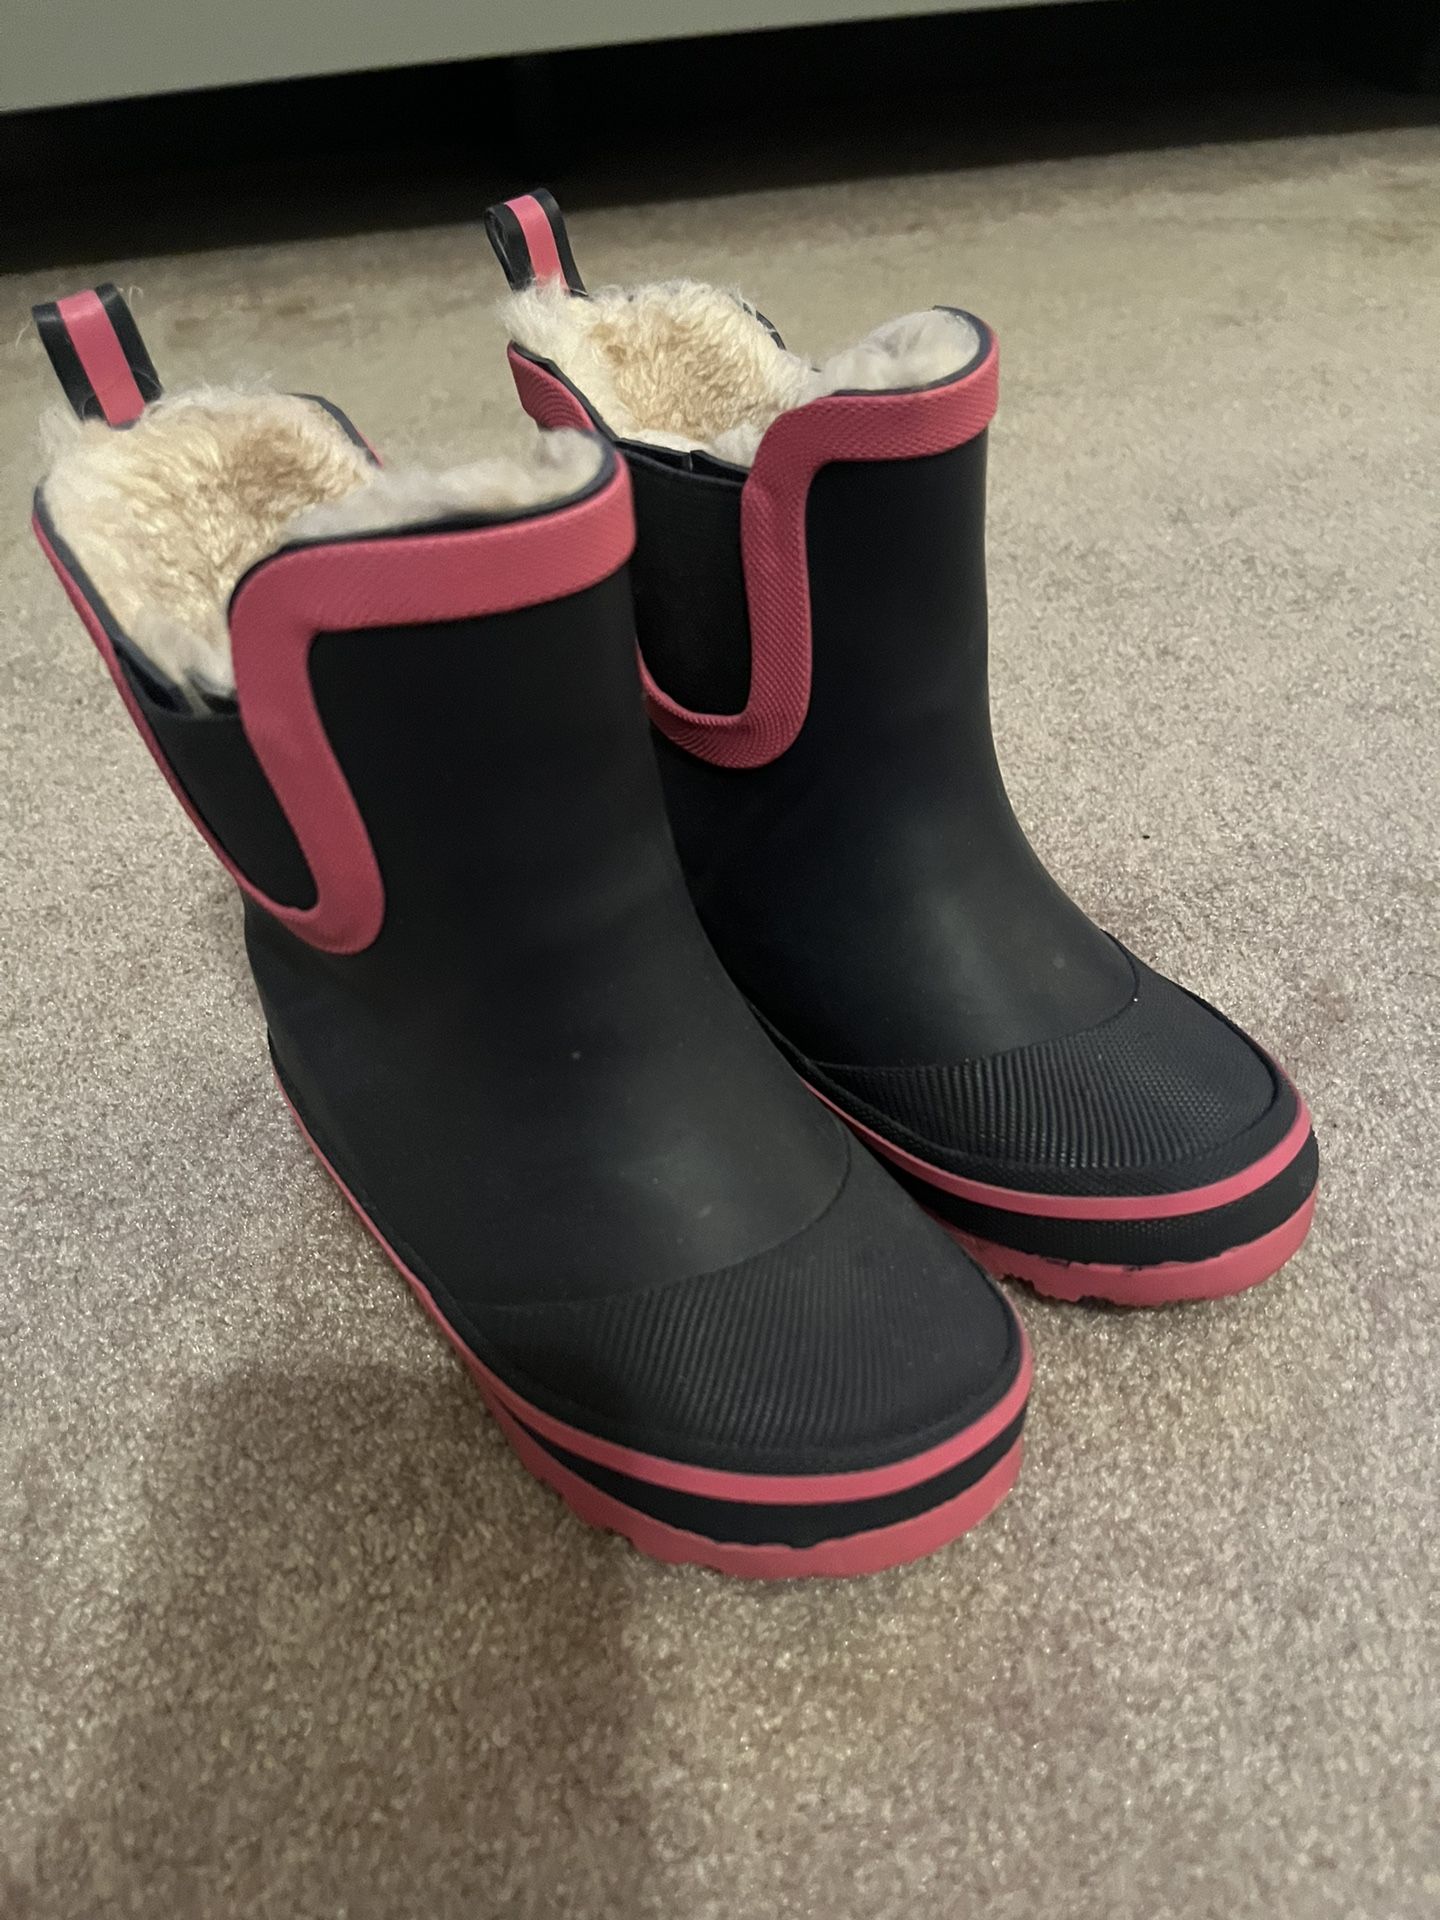 New Lily & Dan Girls Rain Boots Size: 7/8 Waterproof Soft Lining Navy & Pink